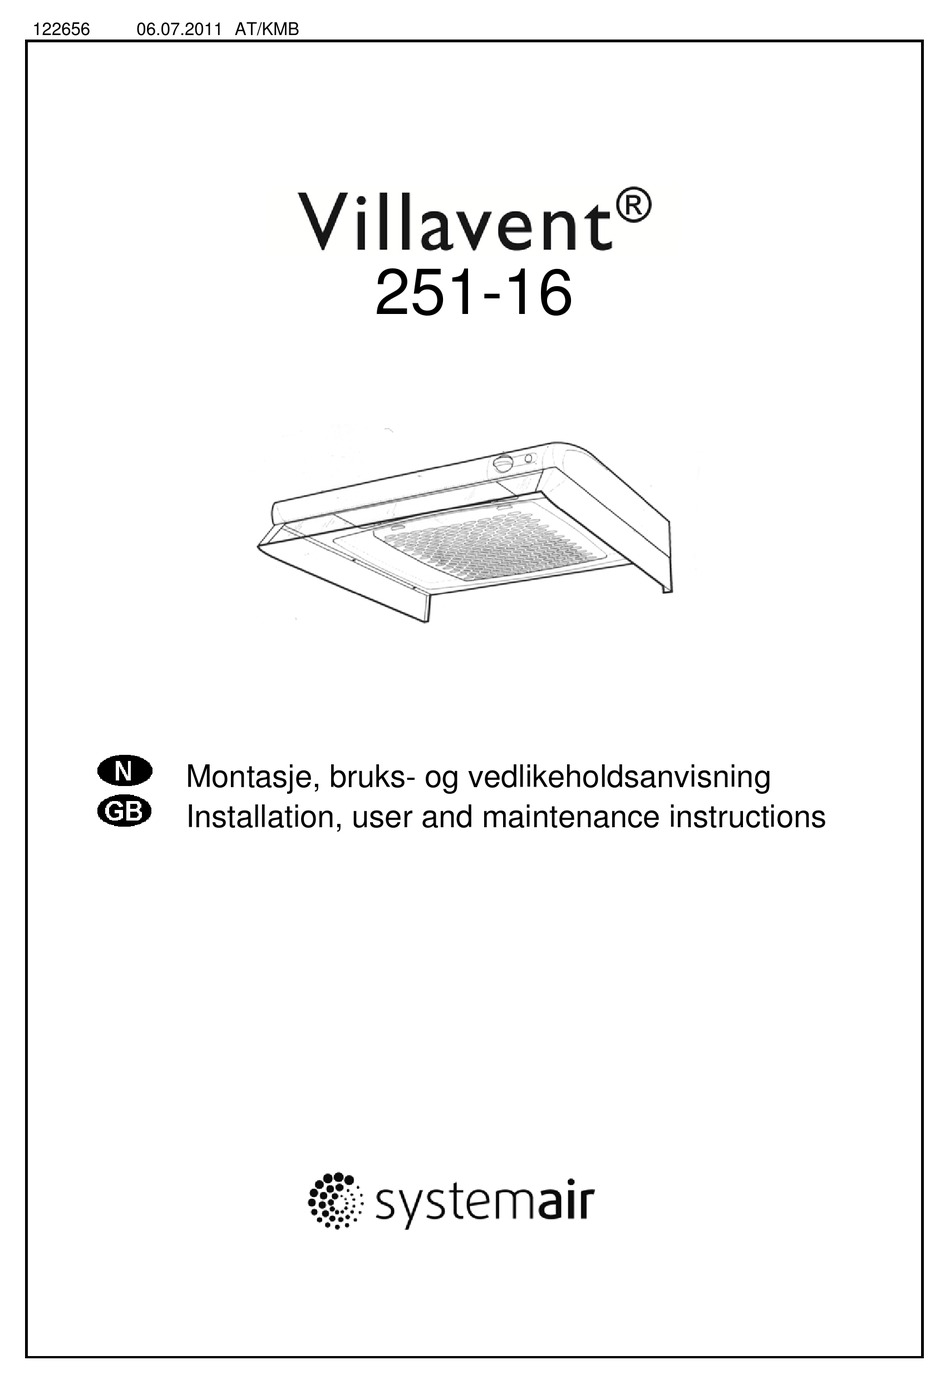 Villavent systemair manual